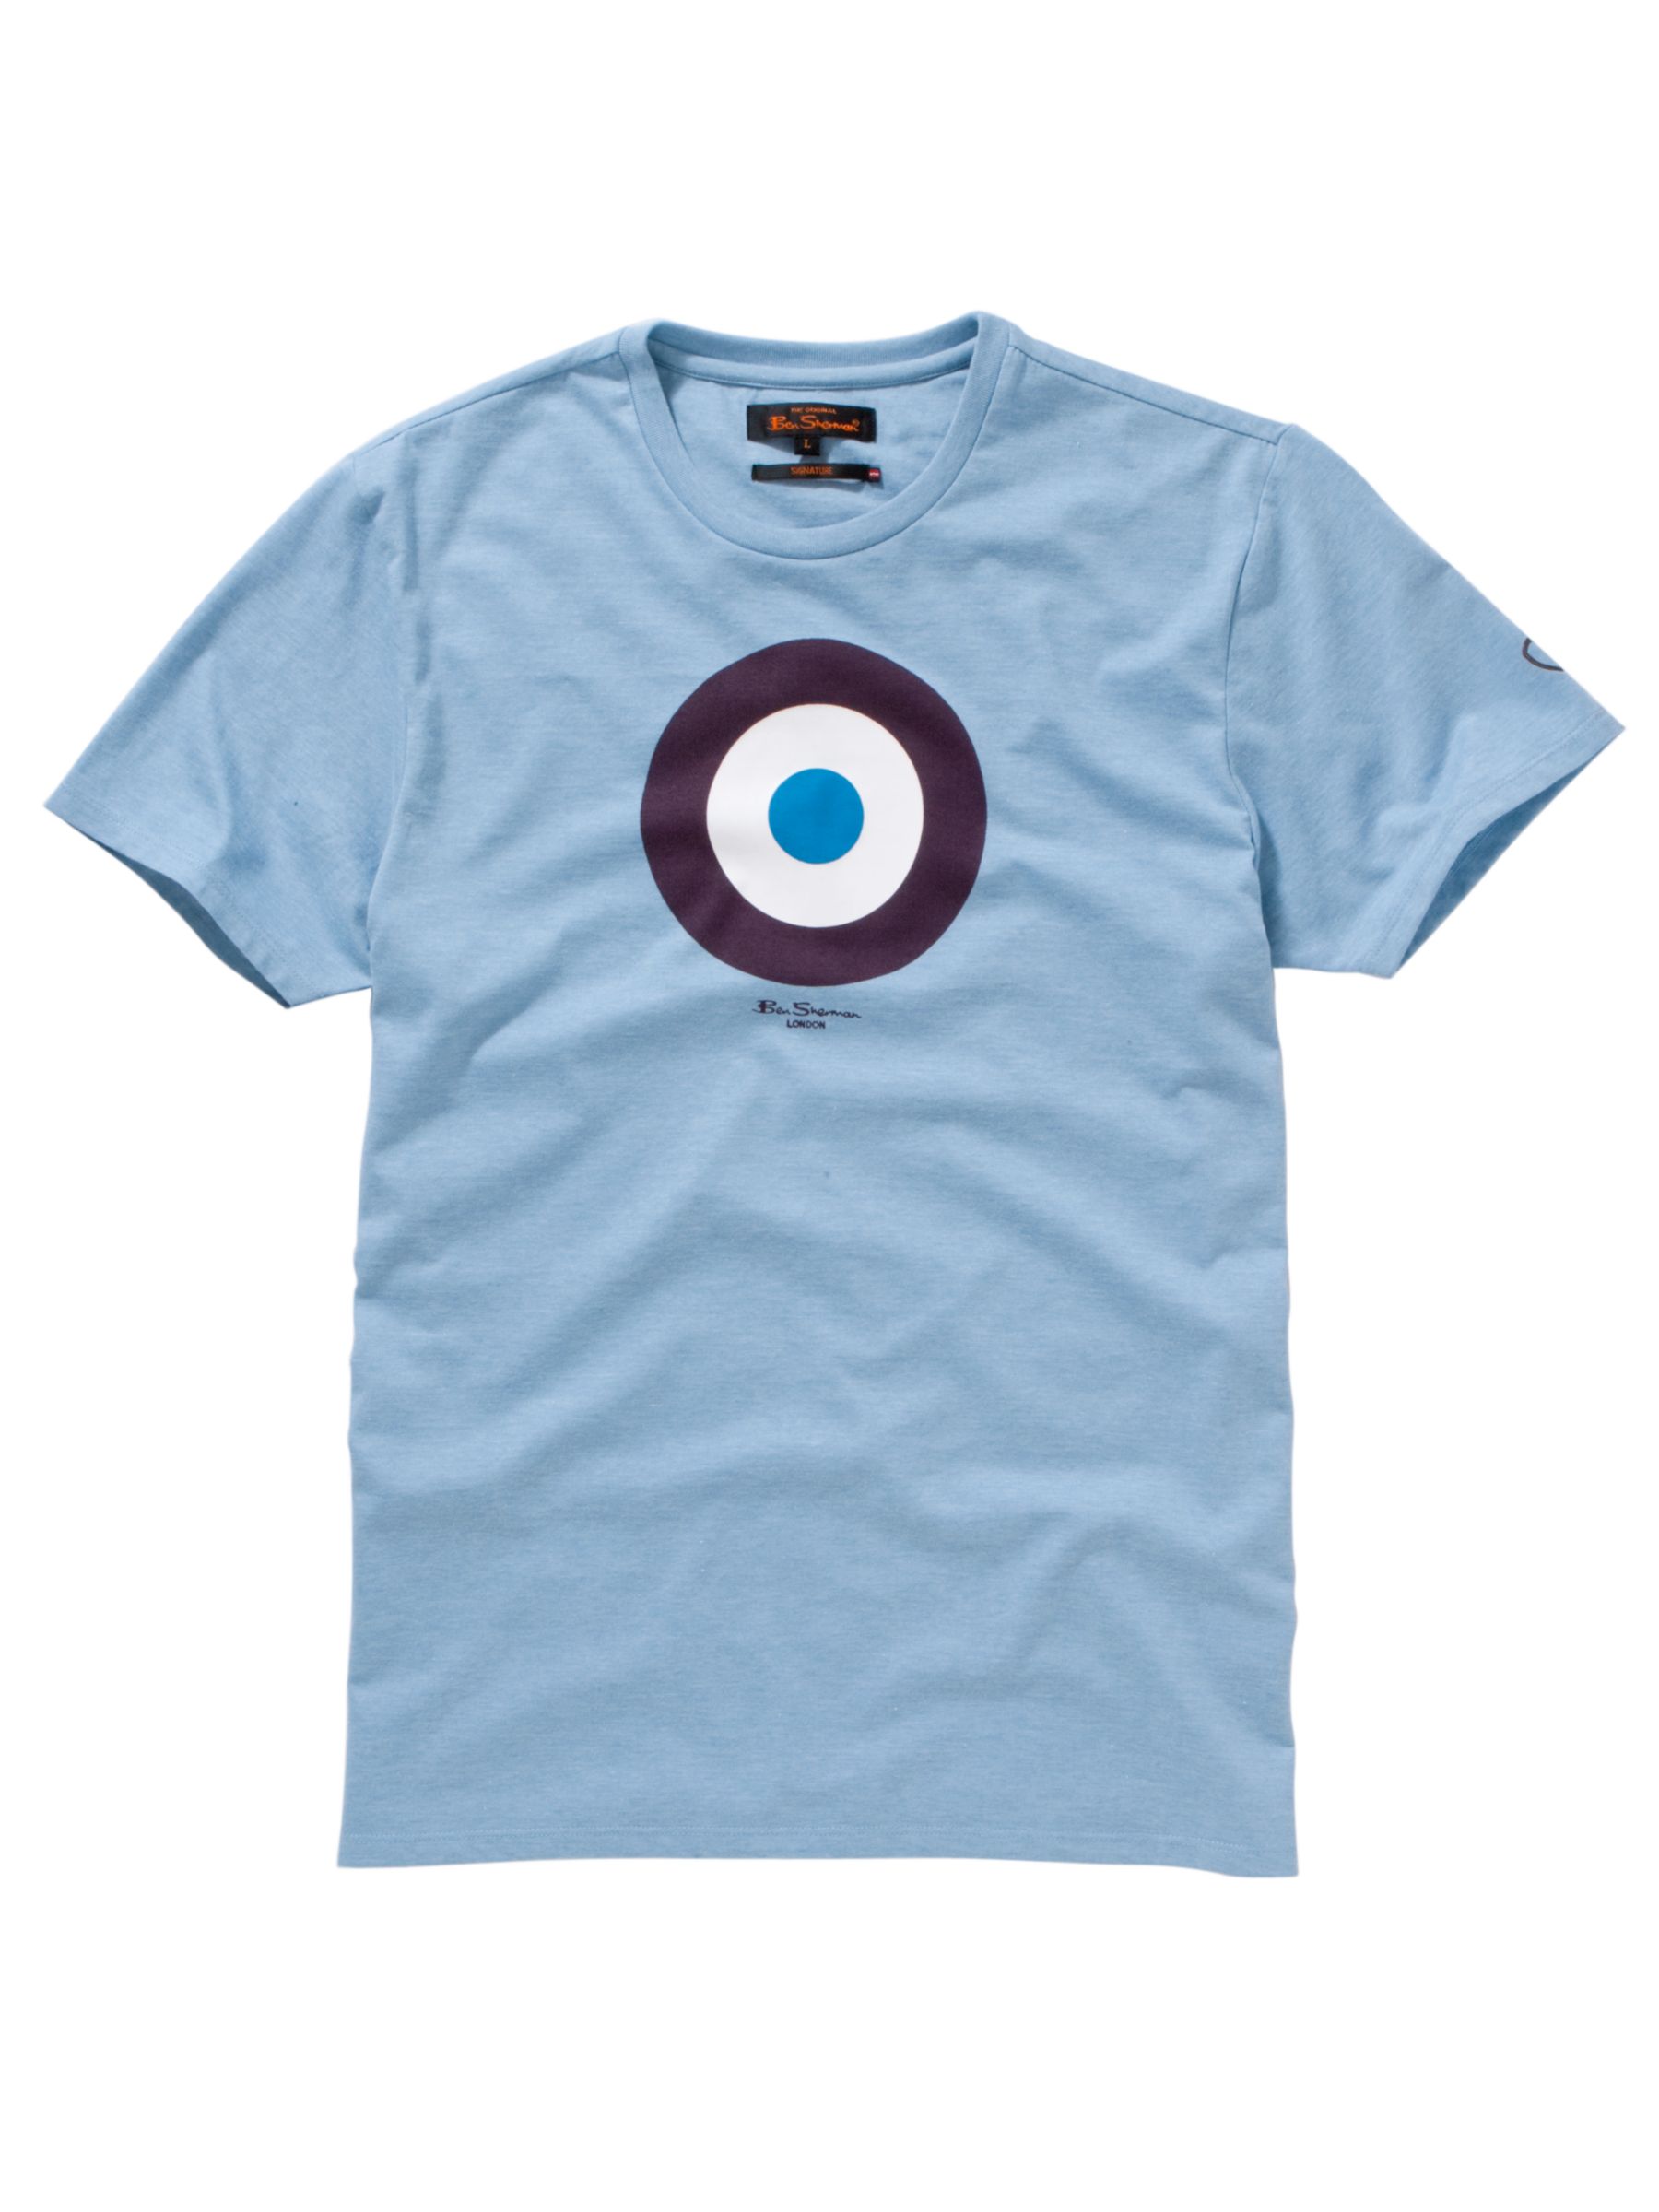 Target Print T-Shirt, Blue Marl